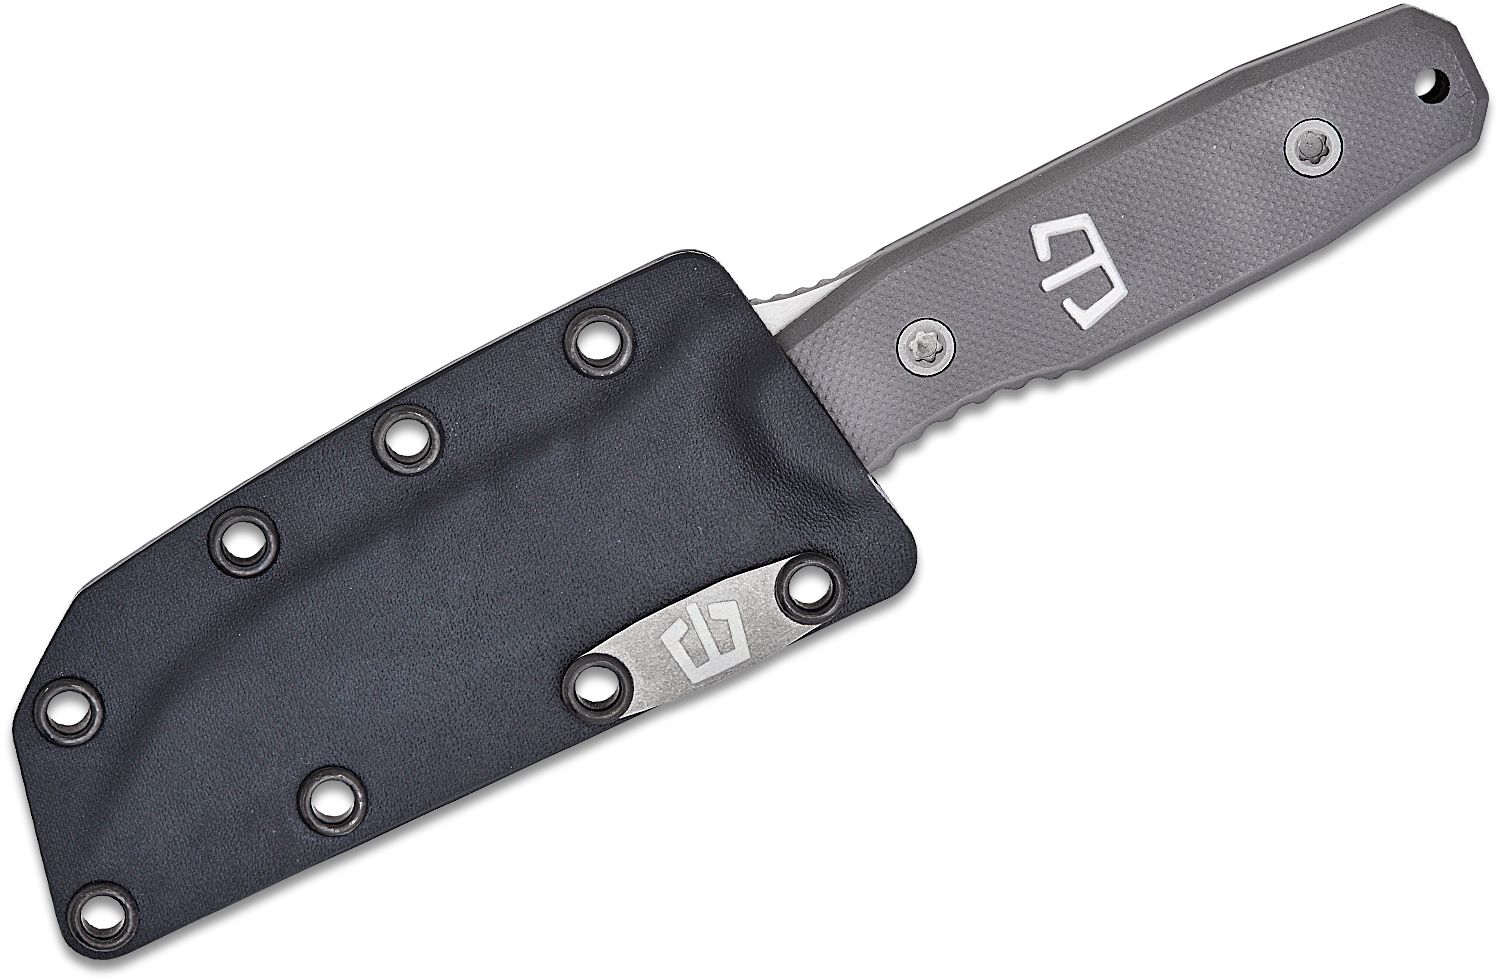 Blackside Customs Americana Fixed Blade Knife 4.25